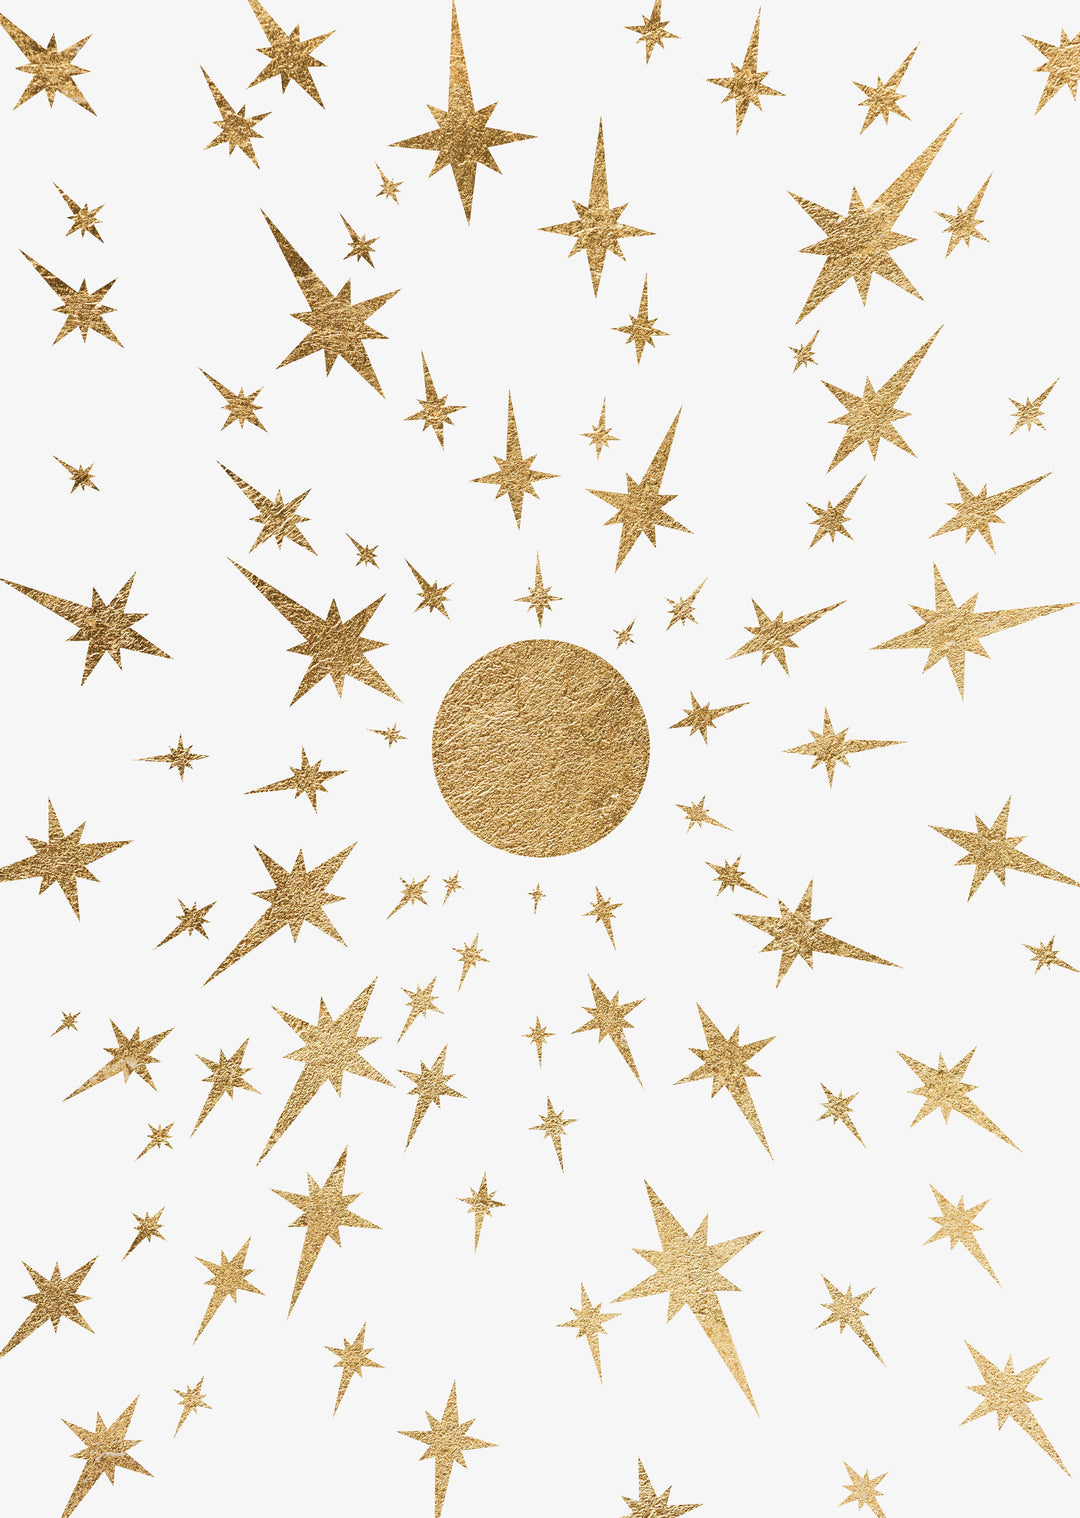 Starry Sky Wall Art Print  (Gold), Contemporary and Stylish Christmas Decoration Alternative Xmas Decor